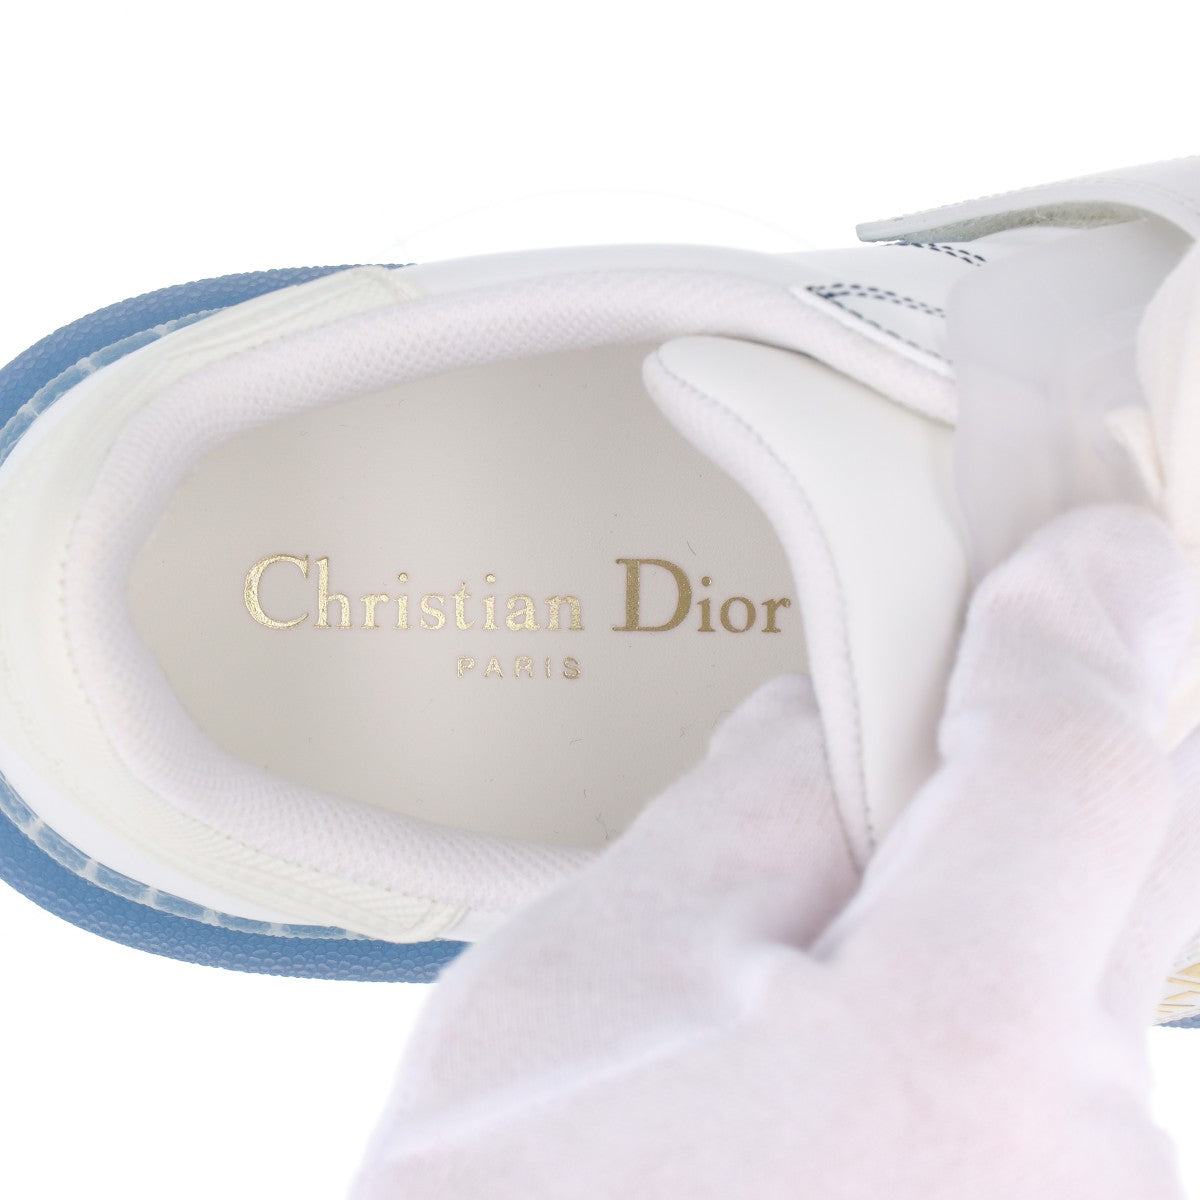 Chris Chandior DIOR-ID 皮革紫砂運動鞋 36.5 藍色×白色 Rement 繩索包